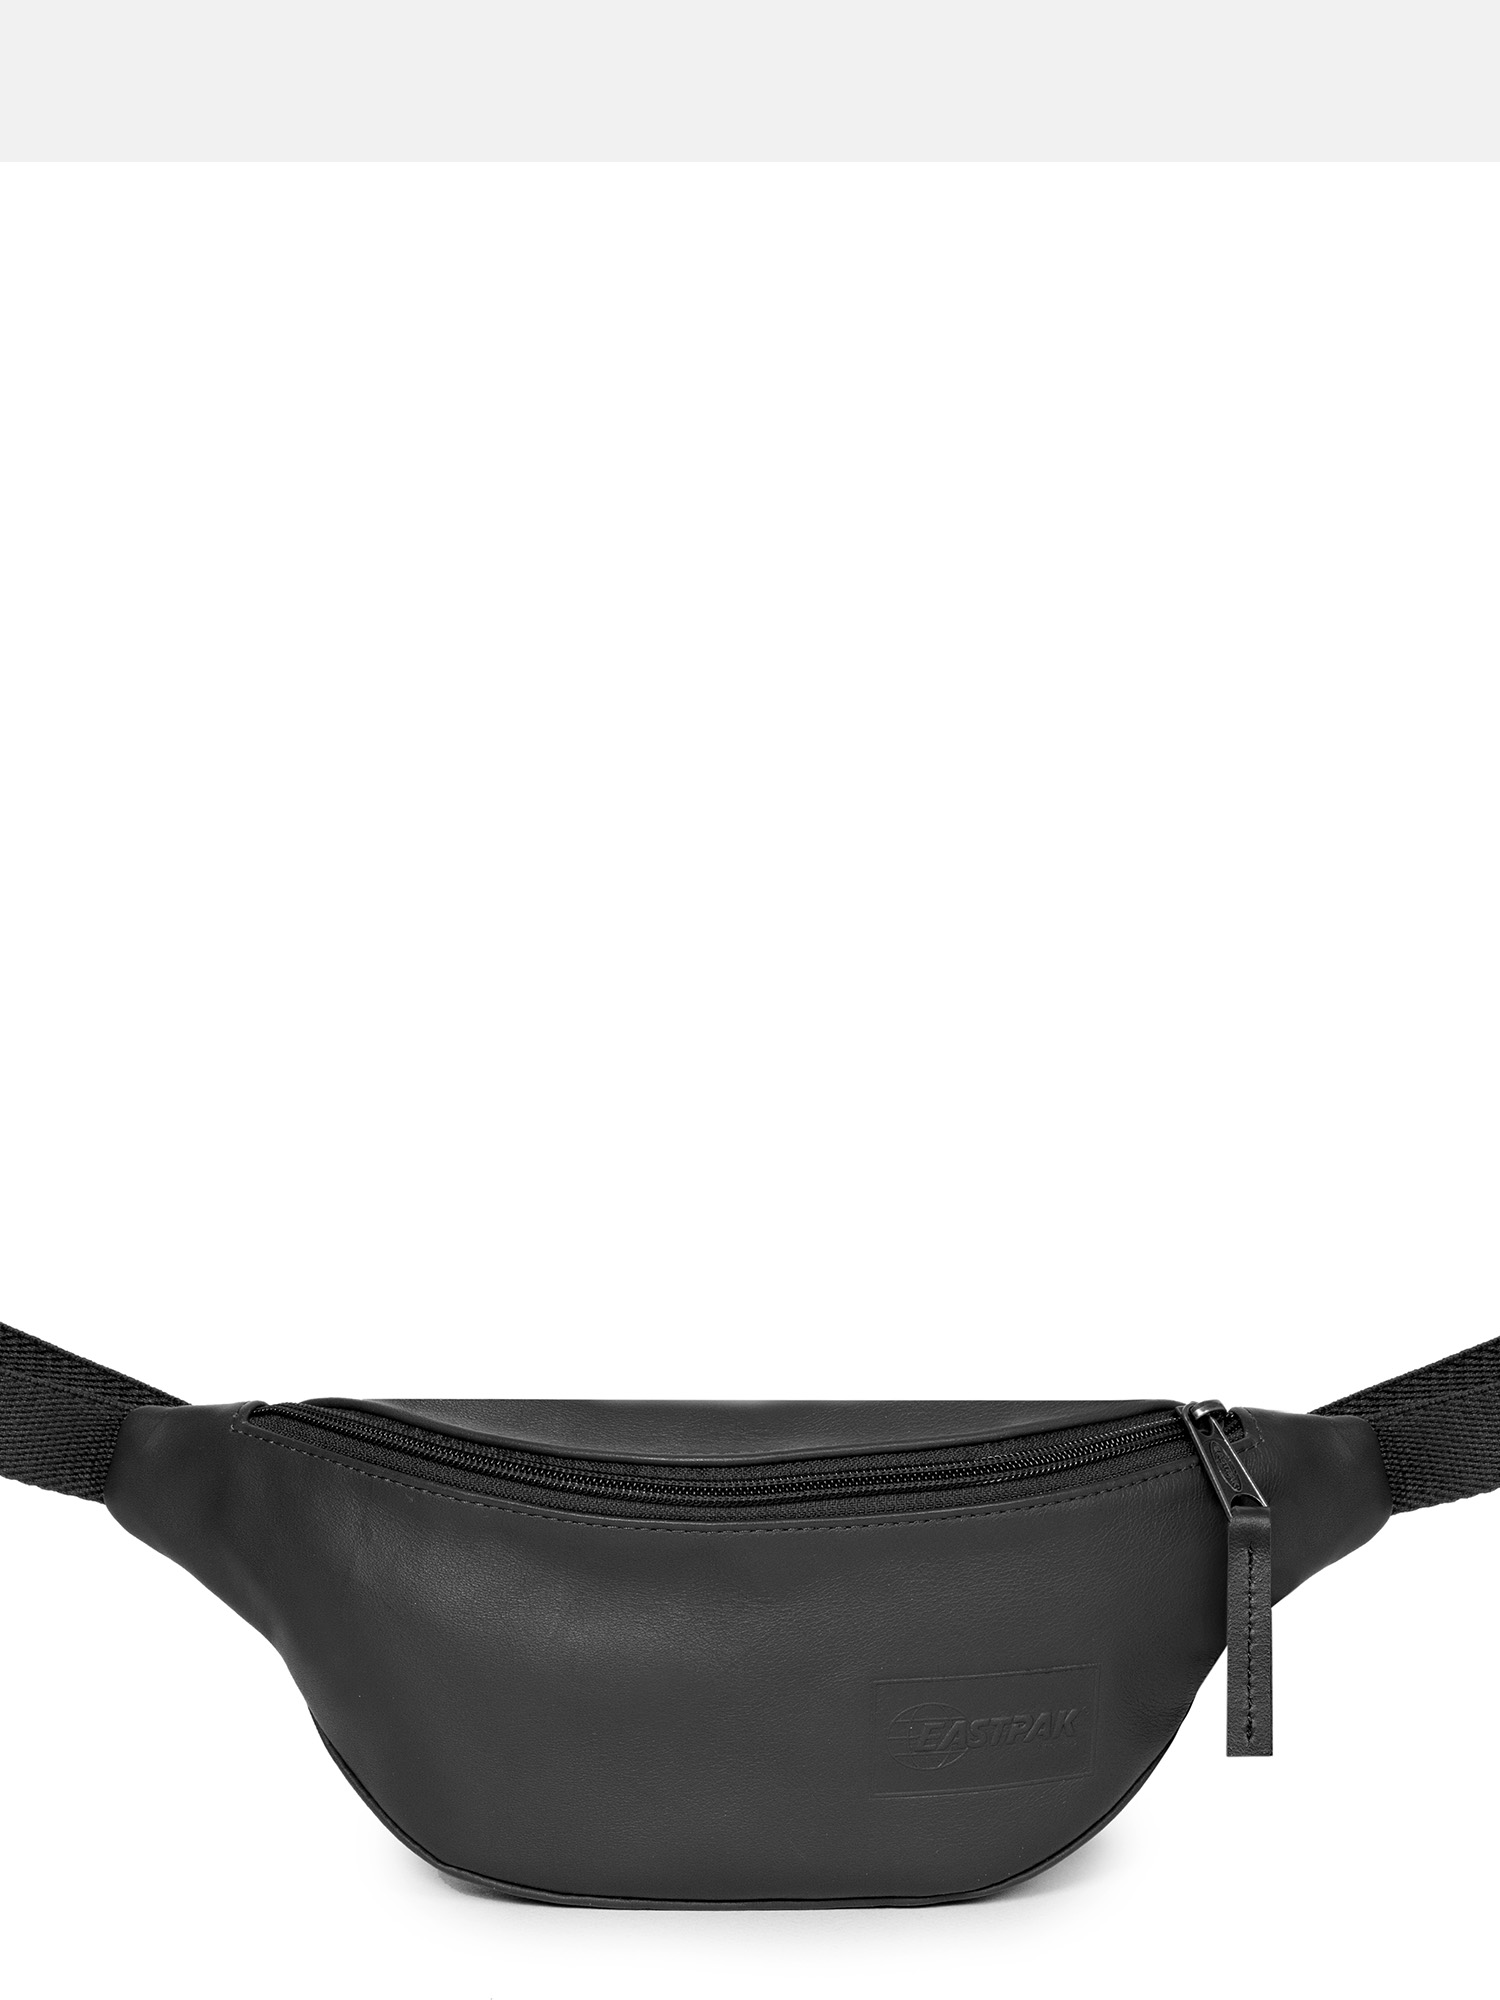 EASTPAK Plecak Springer w kolorze Czarnym 